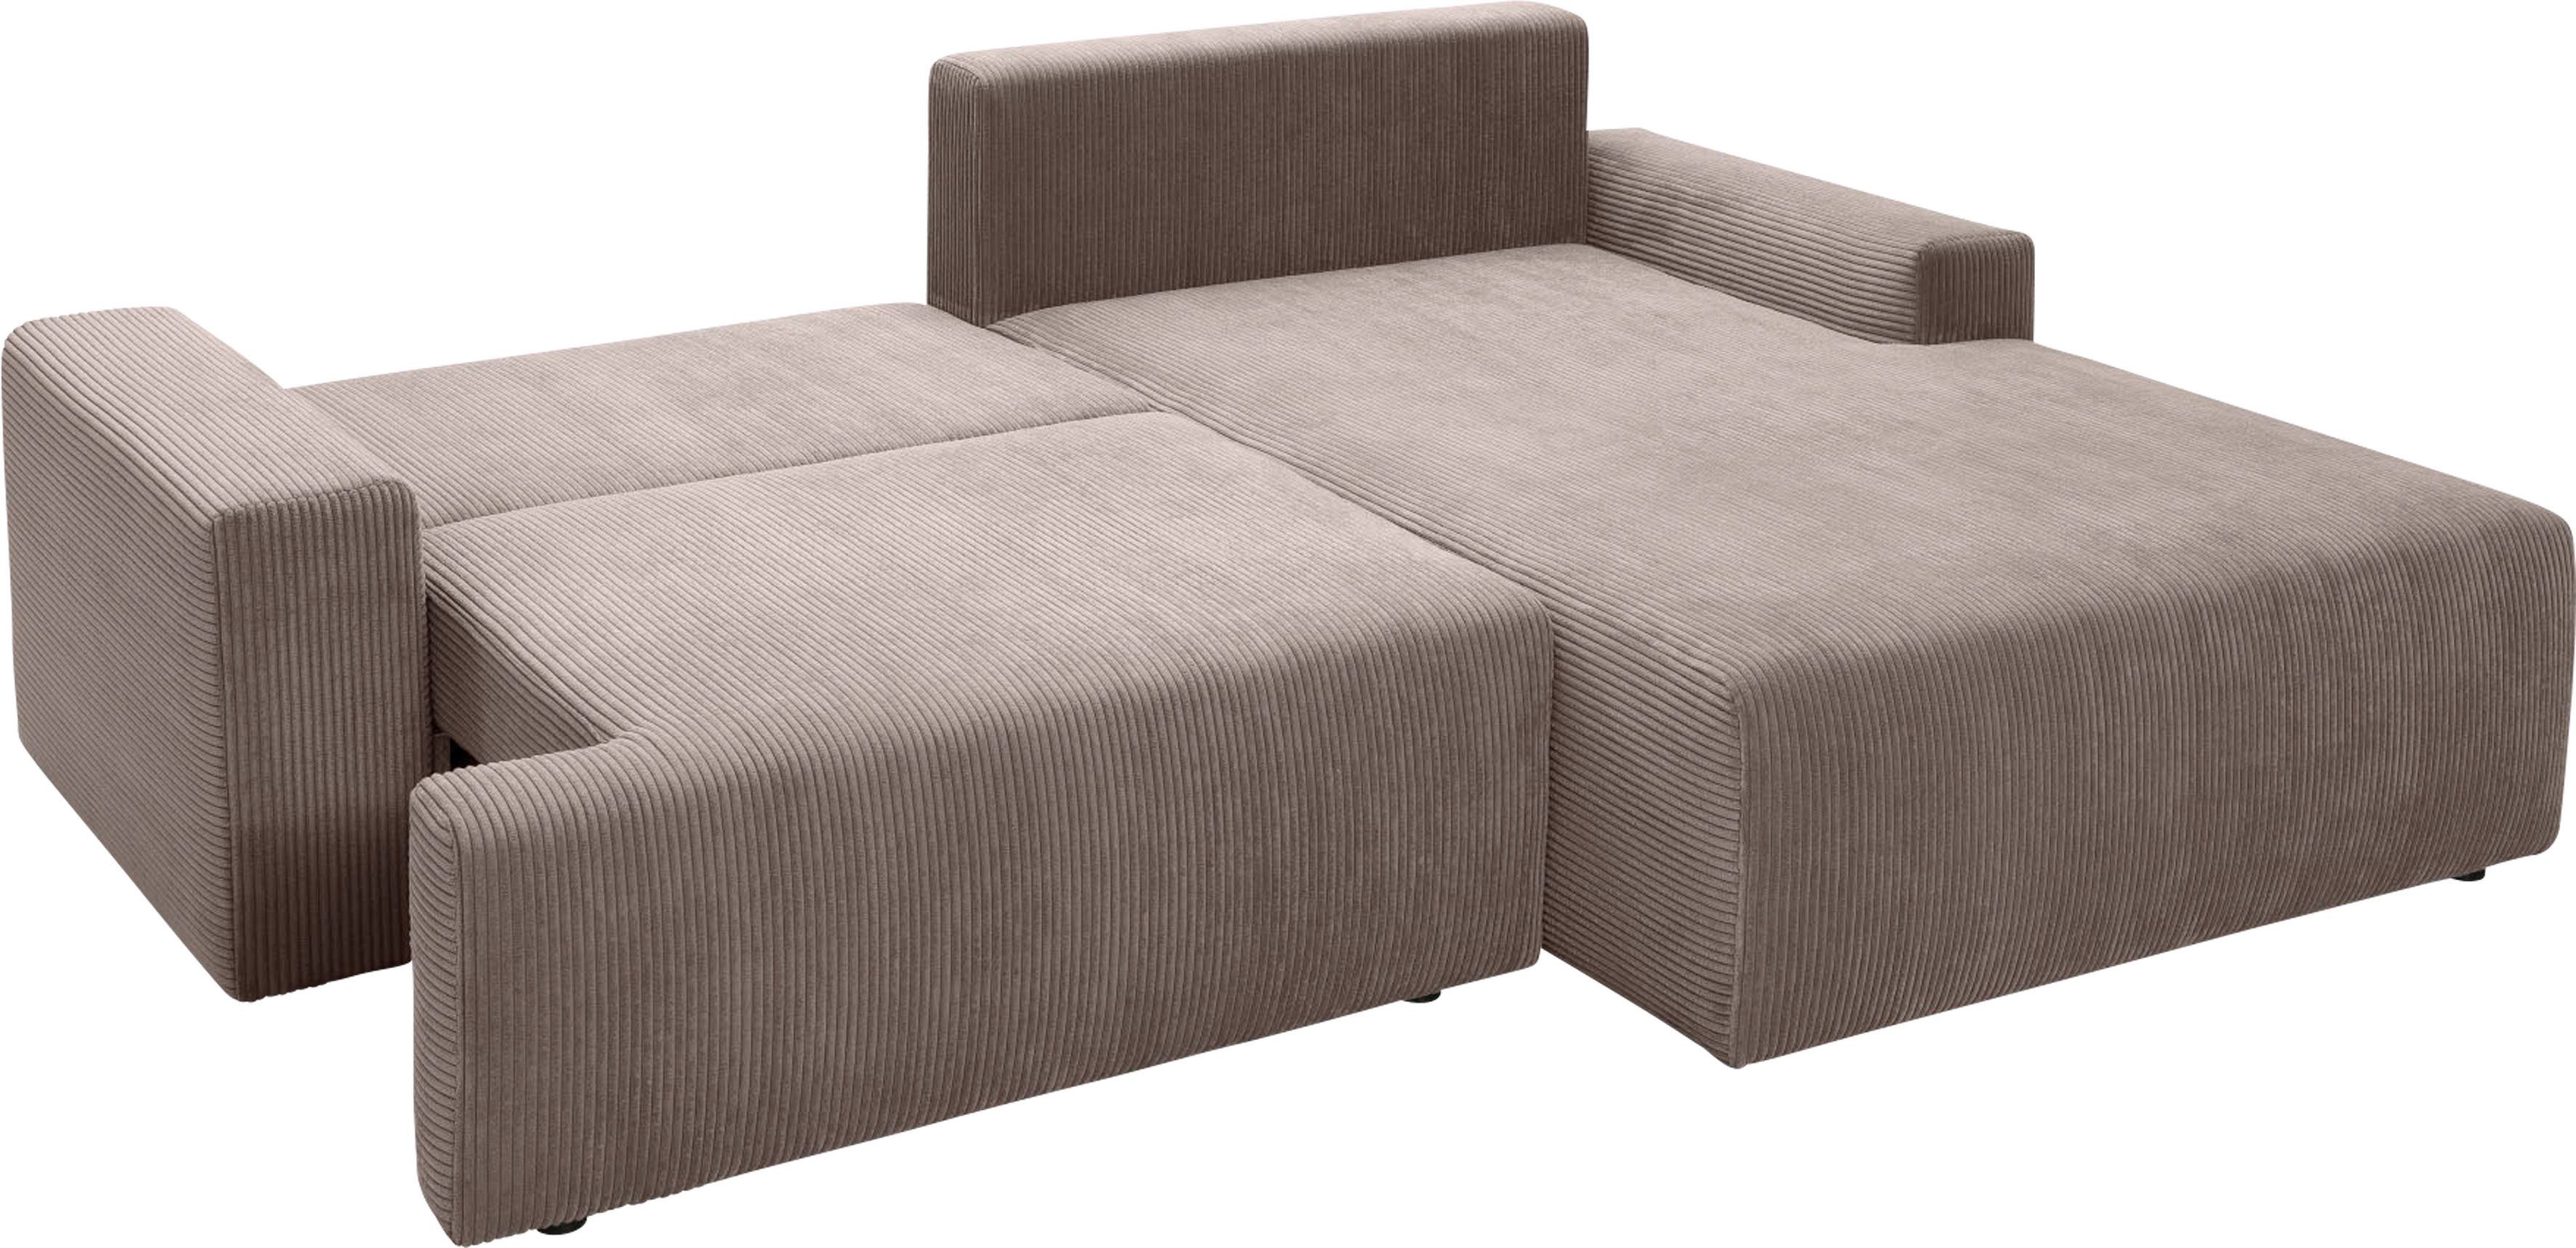 sofa Ecksofa inklusive und cappuccino exxpo Bettfunktion in Bettkasten Orinoko, verschiedenen fashion - Cord-Farben